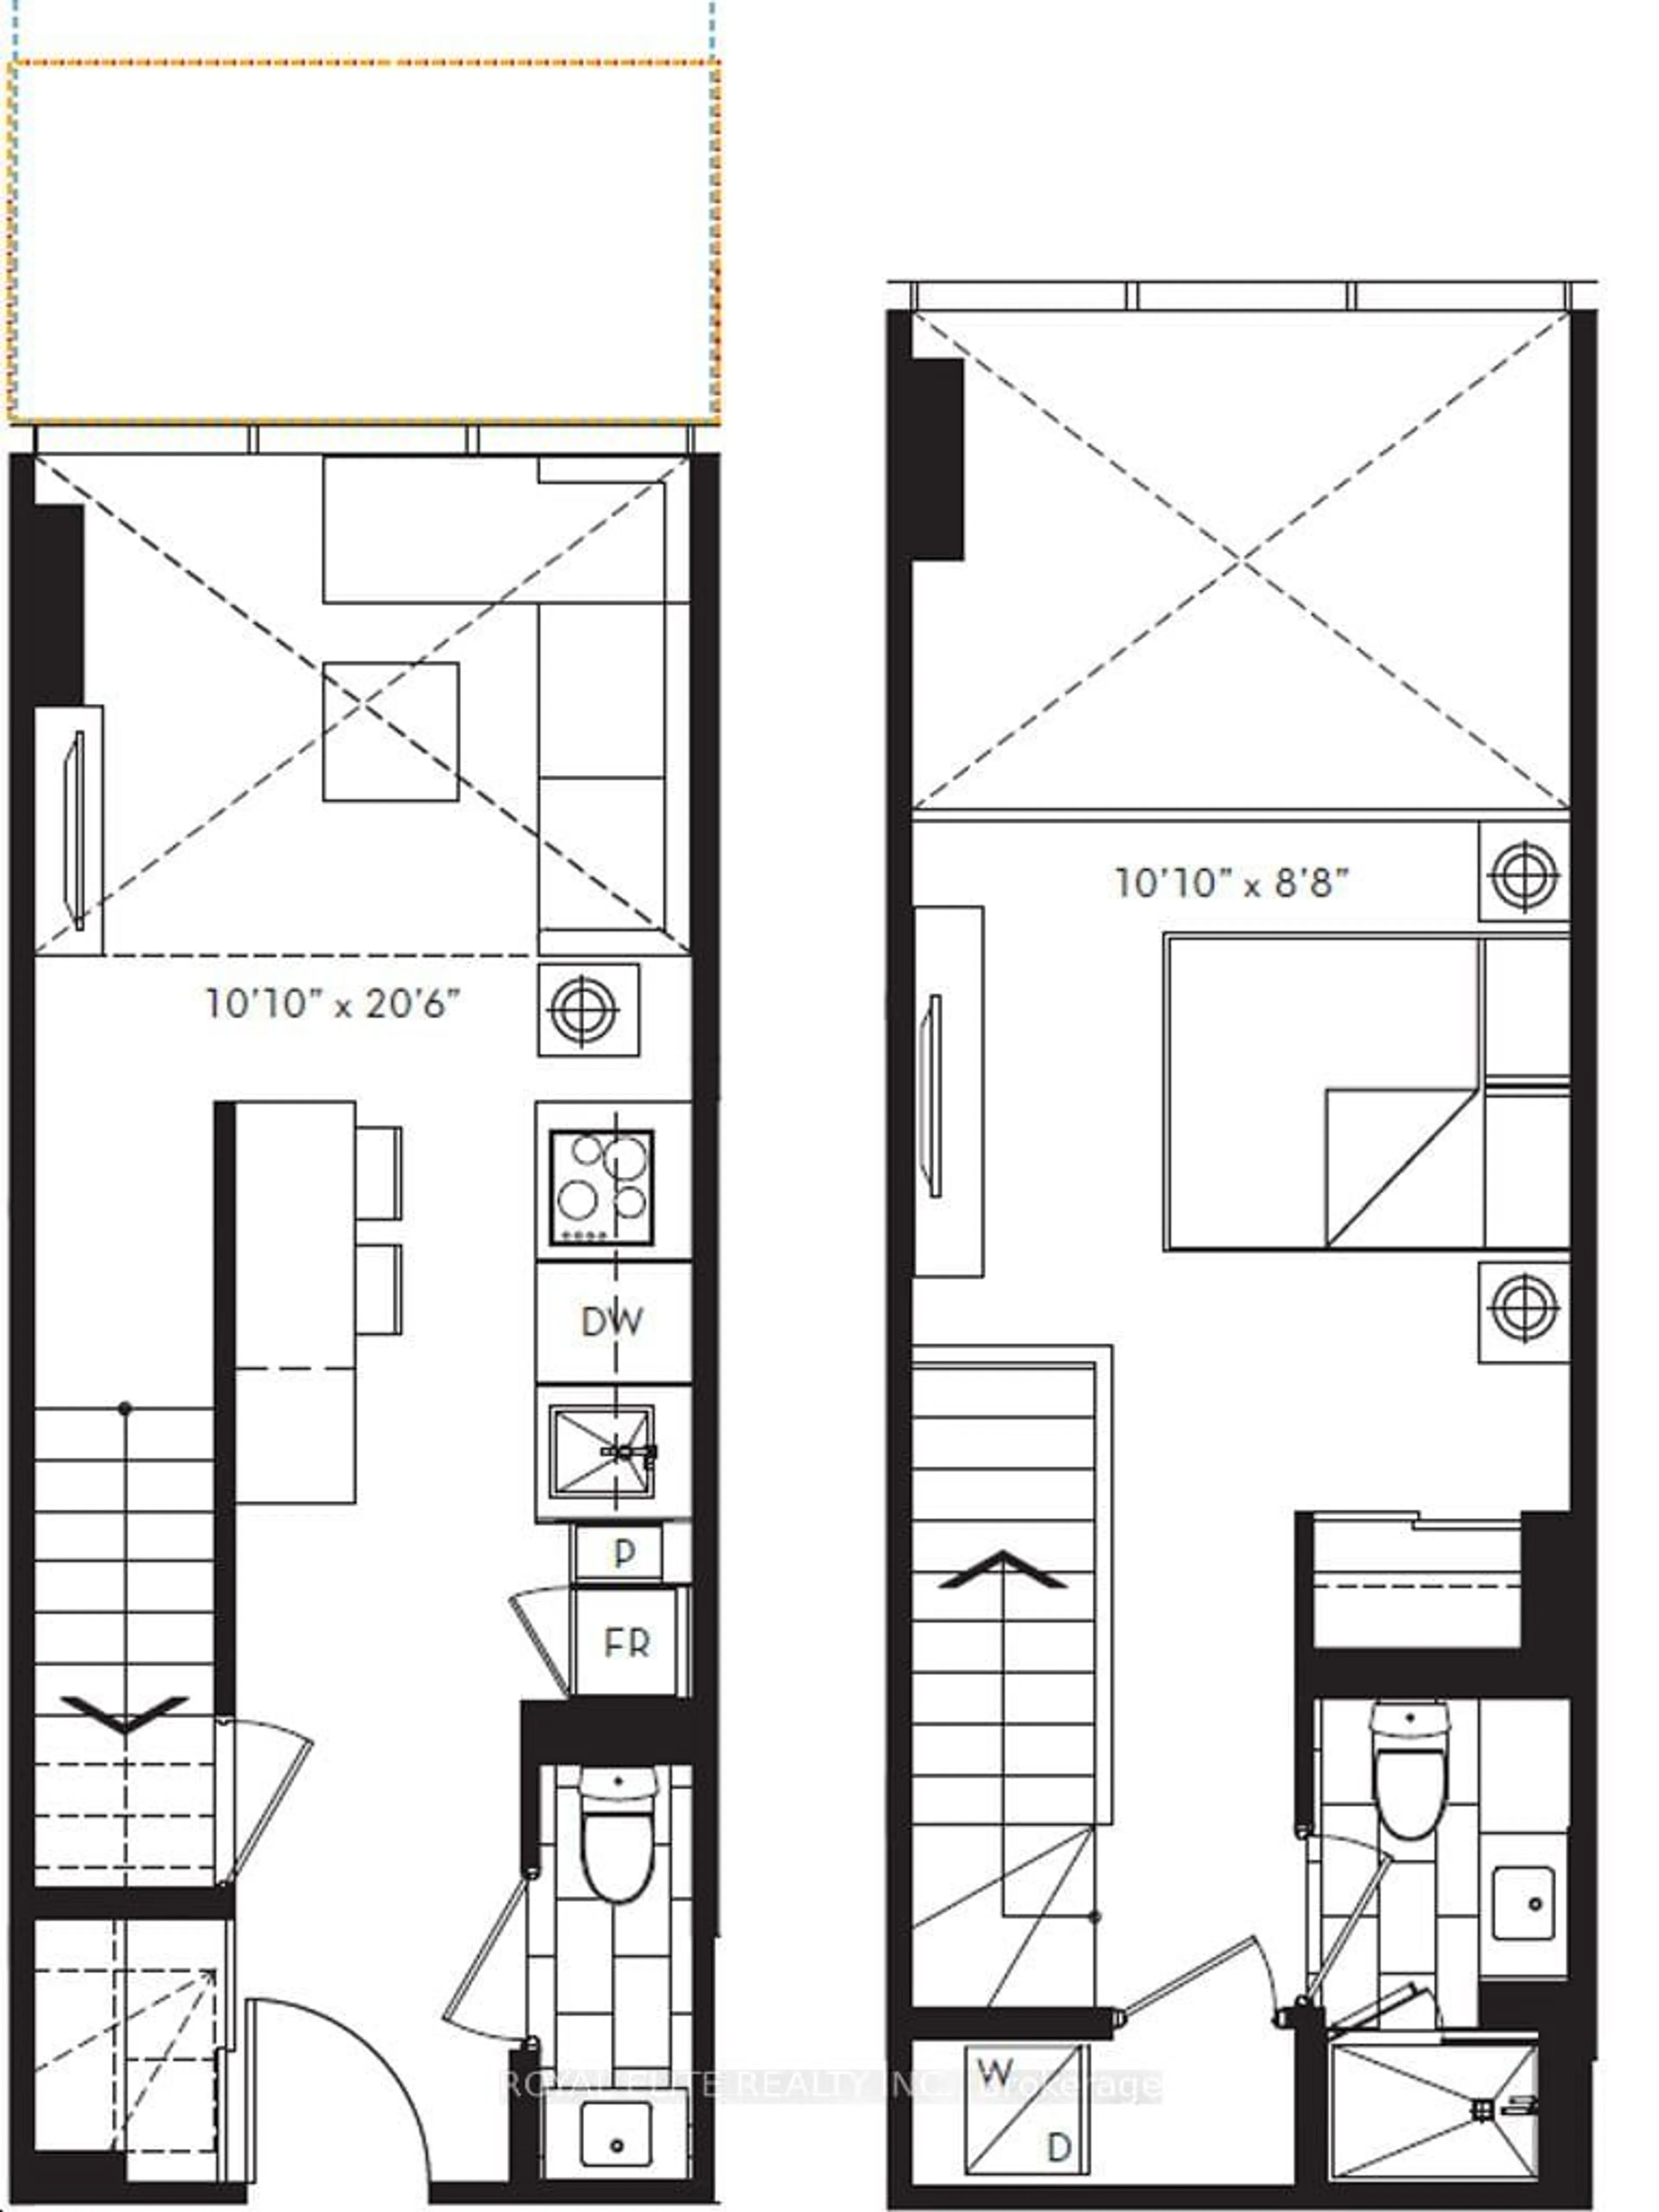 Floor plan for 77 Shuter St #520, Toronto Ontario M5C 1S1